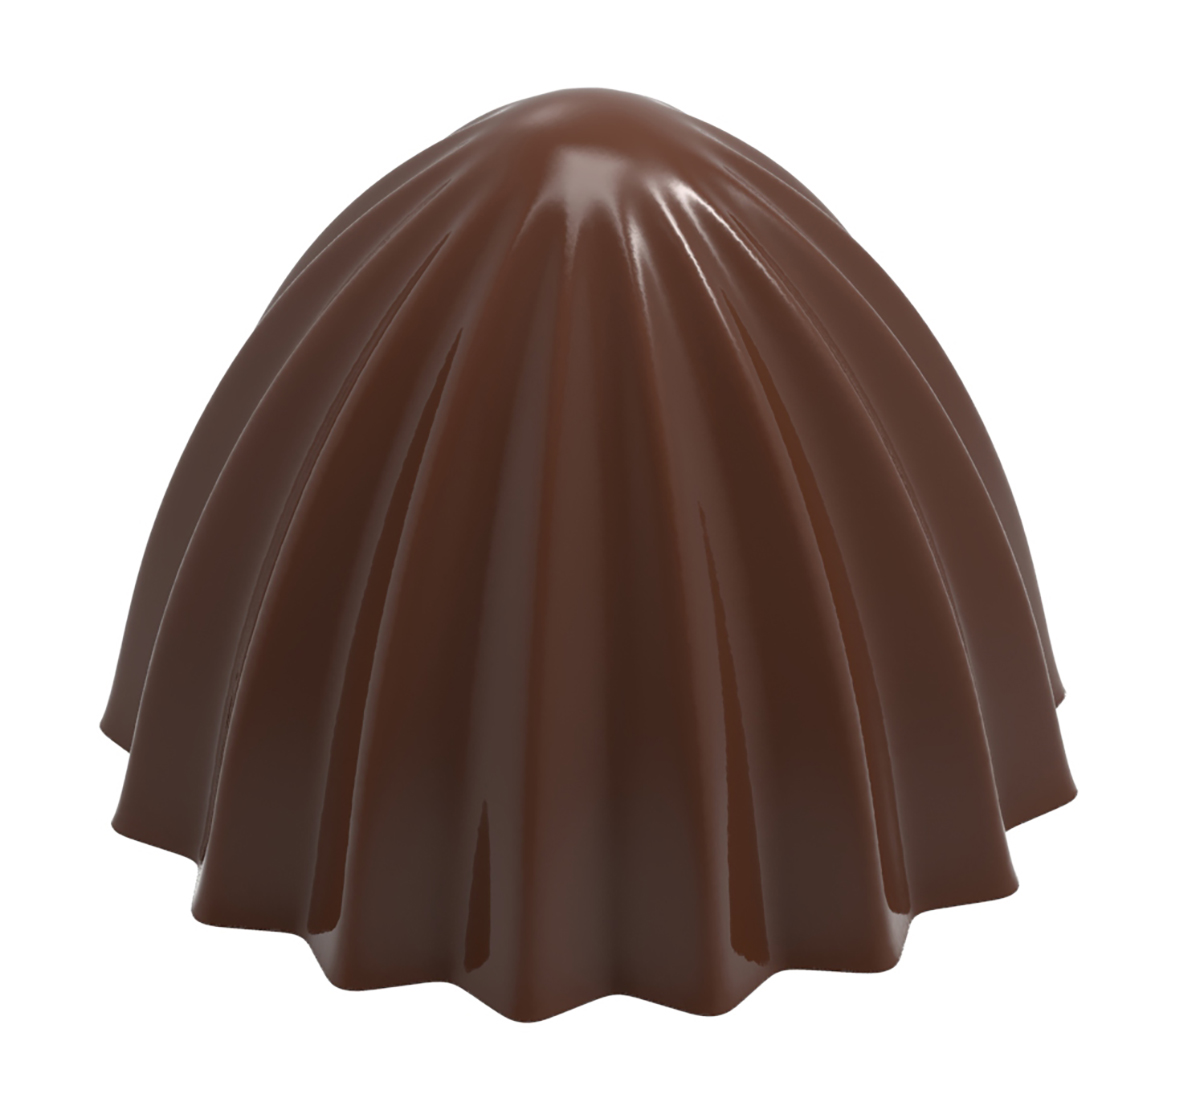 Professionel chokoladeform i polycarbonat - The Juicer - Dutch Pastry Team CW1926